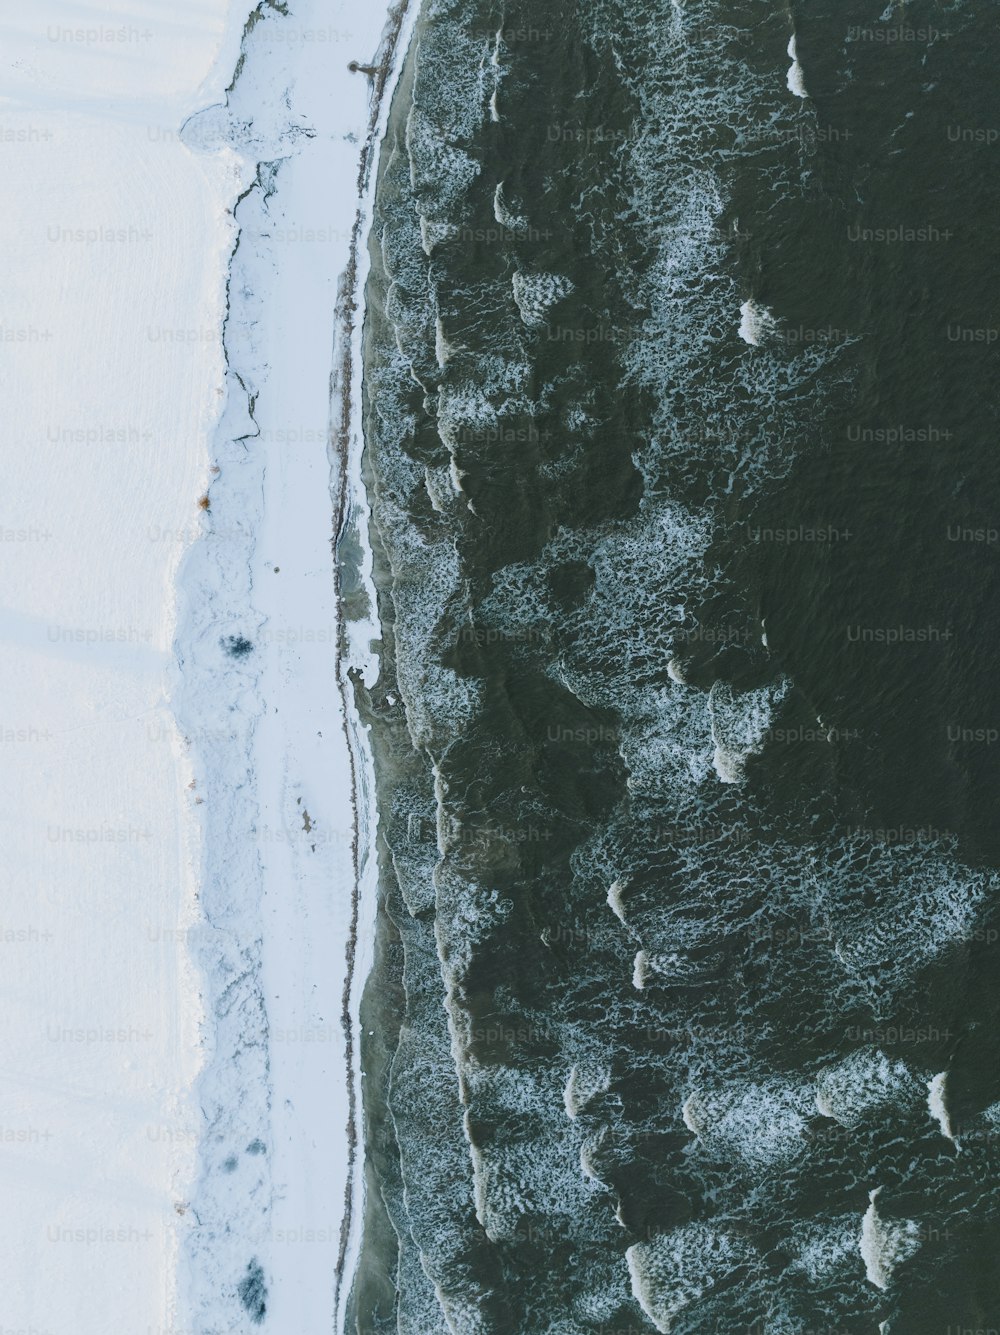 uma vista panorâmica de uma praia coberta de neve